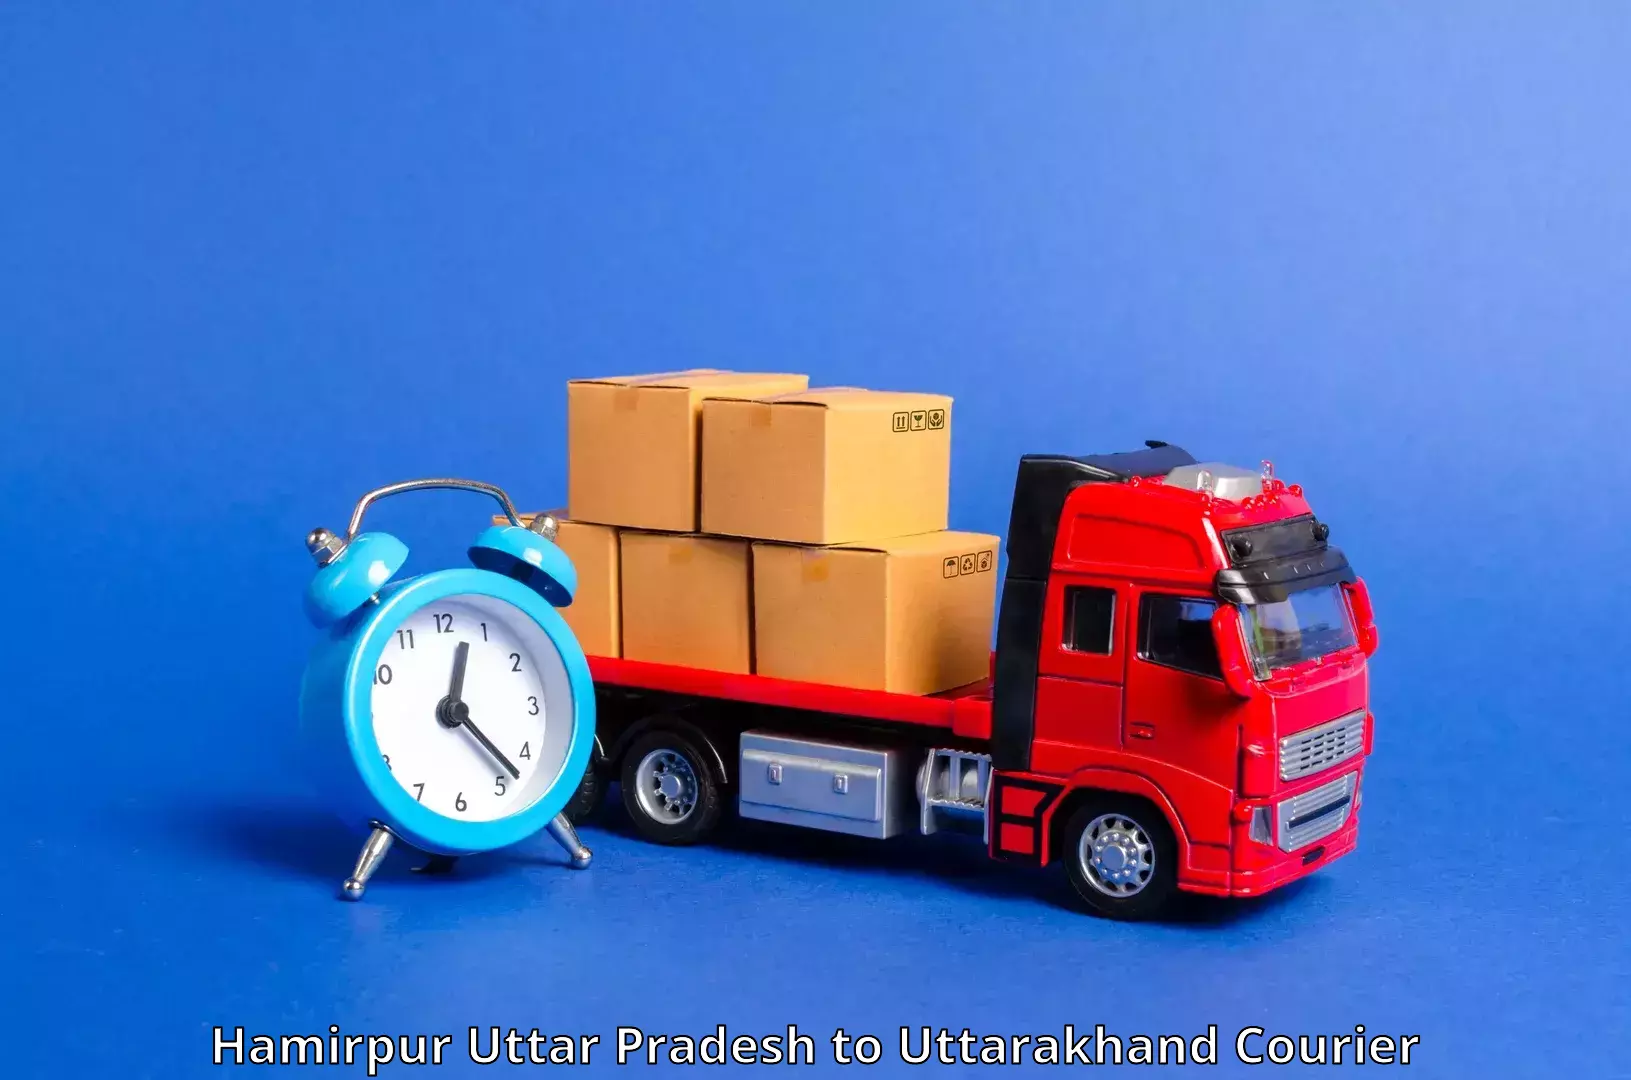 Comprehensive logistics Hamirpur Uttar Pradesh to Uttarakhand